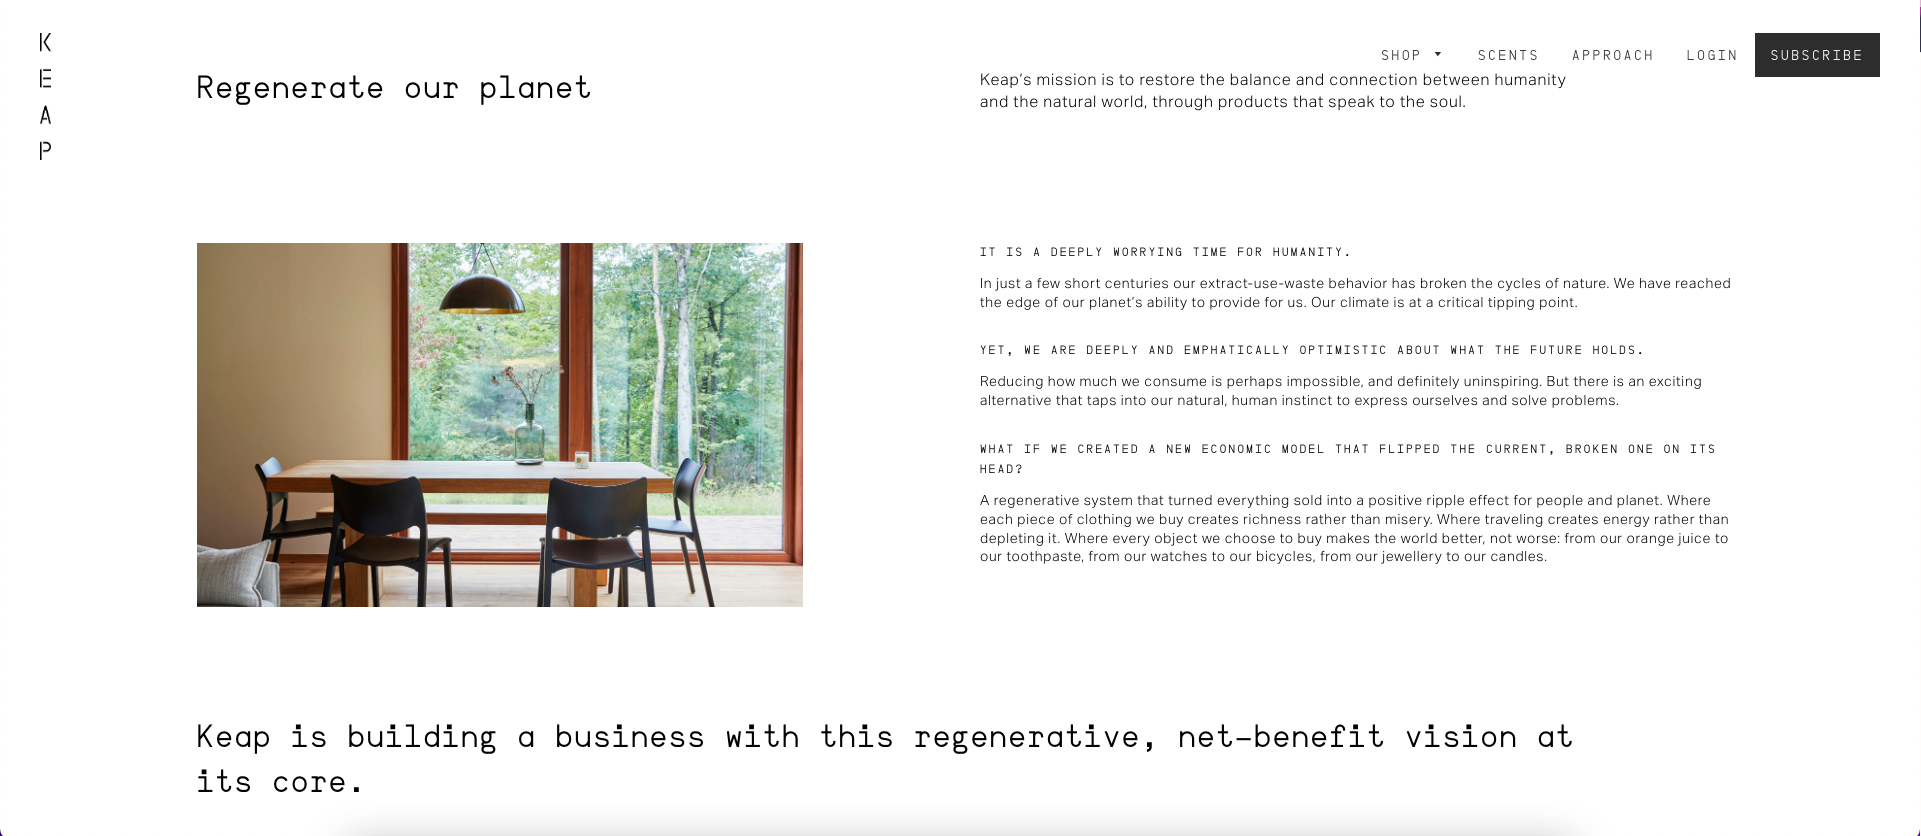 Screenshot of Keap Candles' webpage highlighting their regenerative, net-benefit vision.